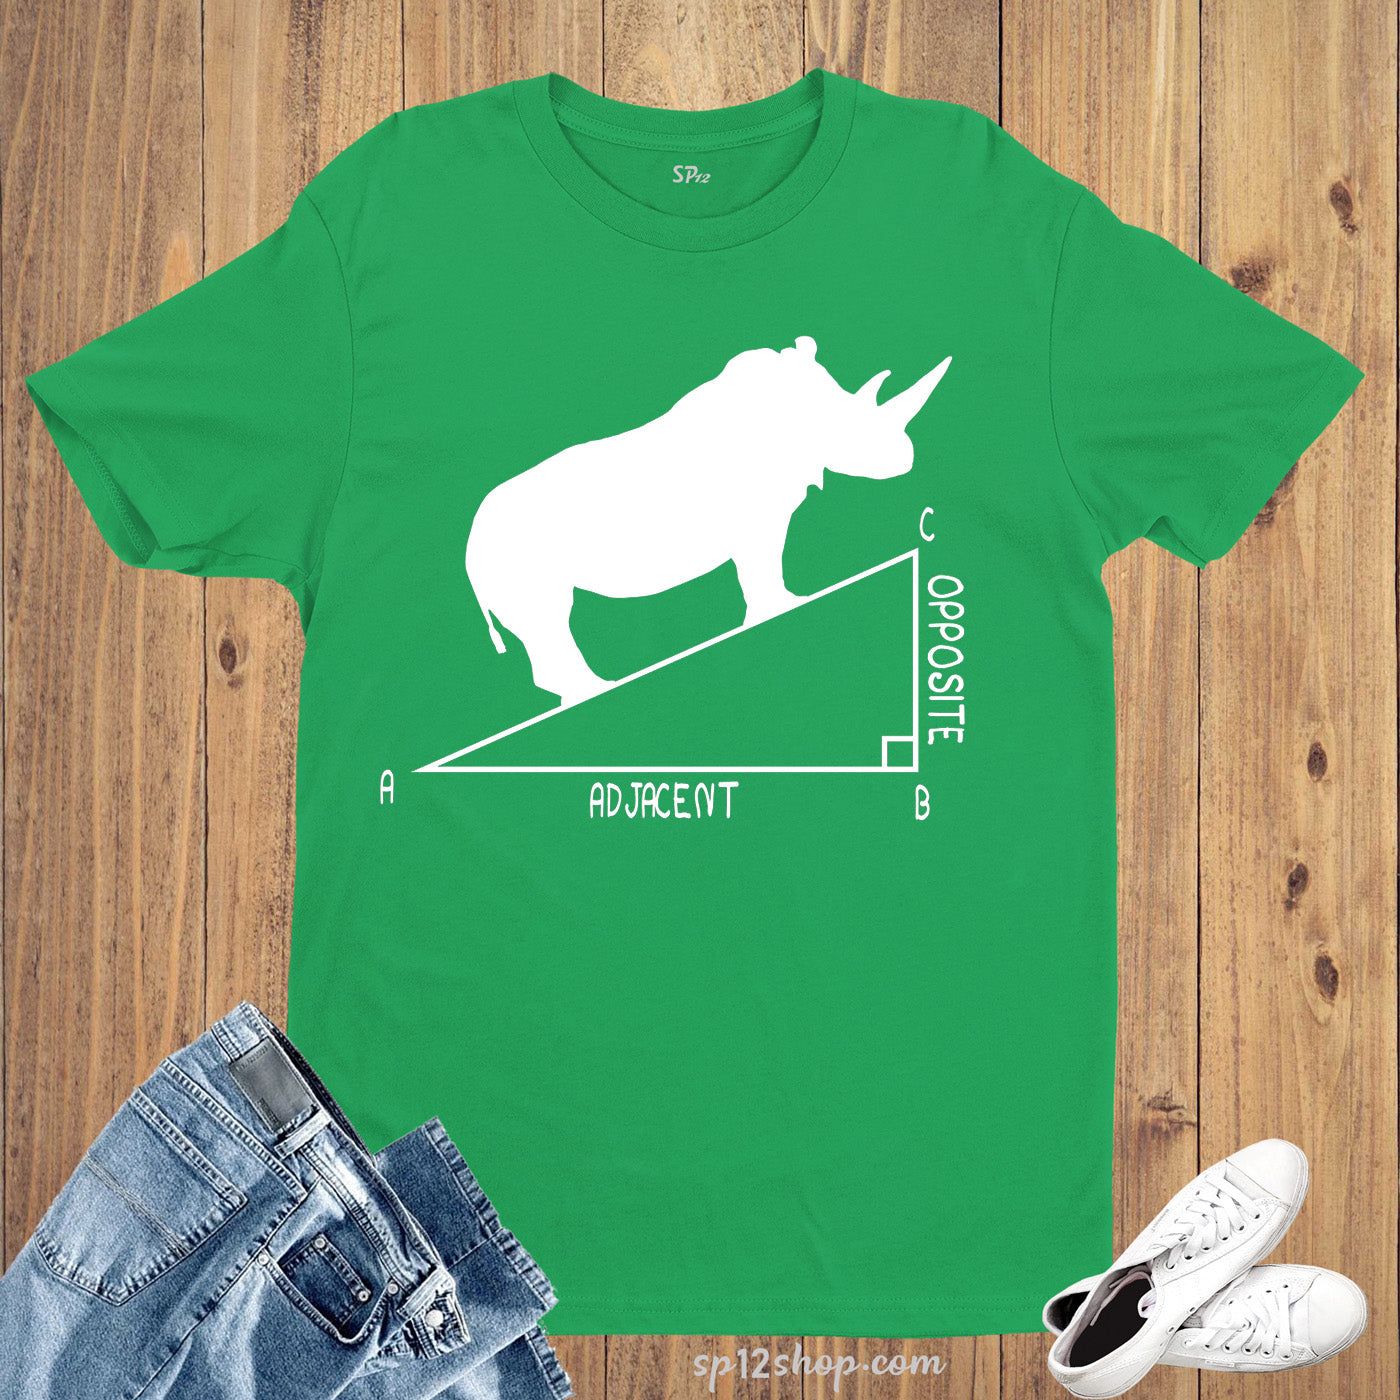 Maths Funny Slogan T Shirt Adjacent Opposite Hippopotamus